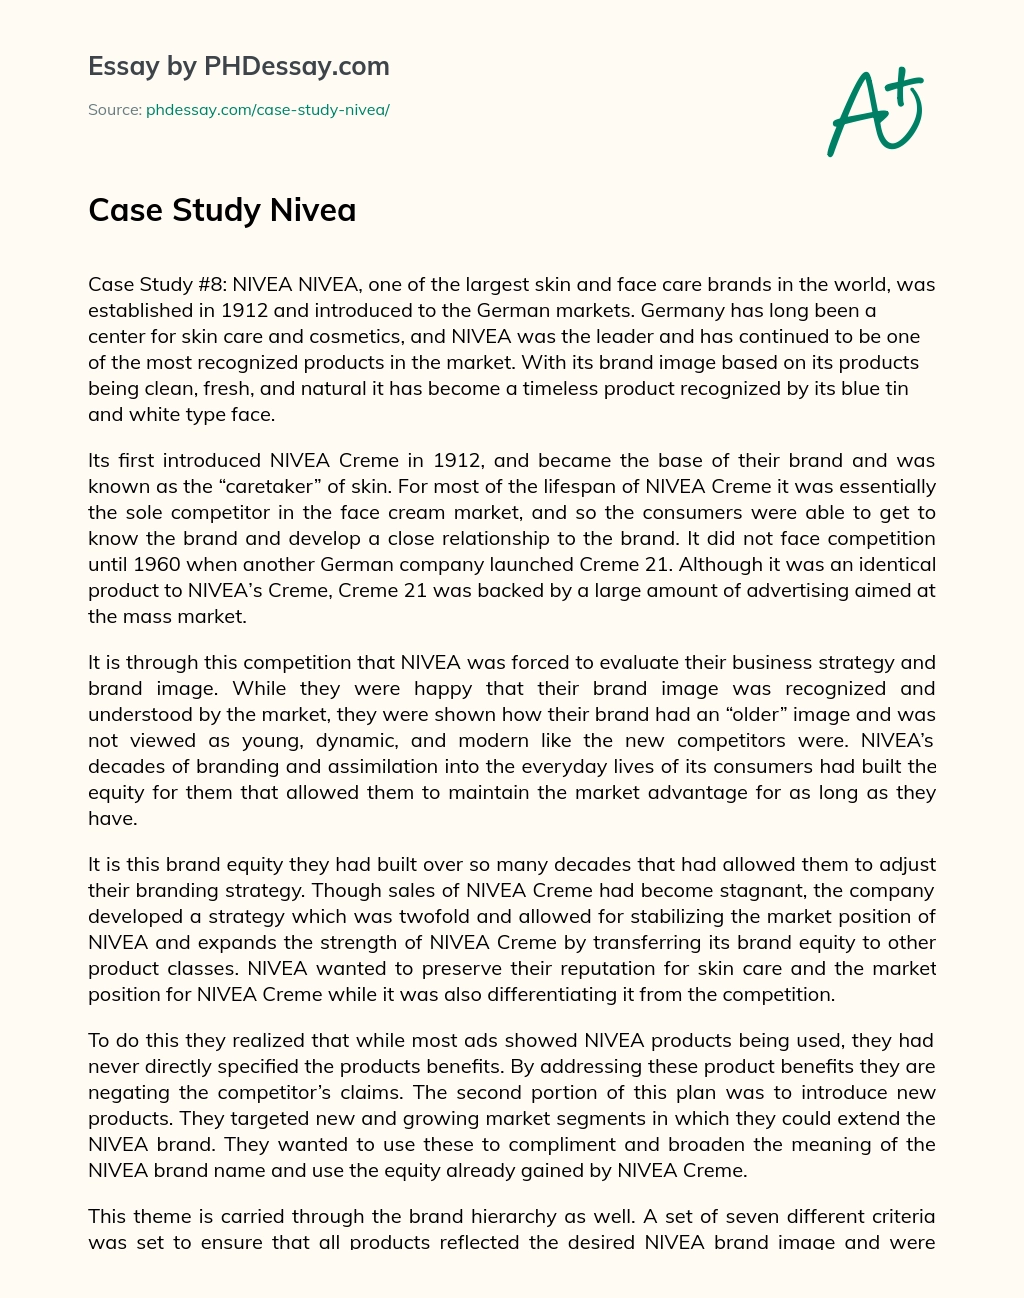 Case Study Nivea essay